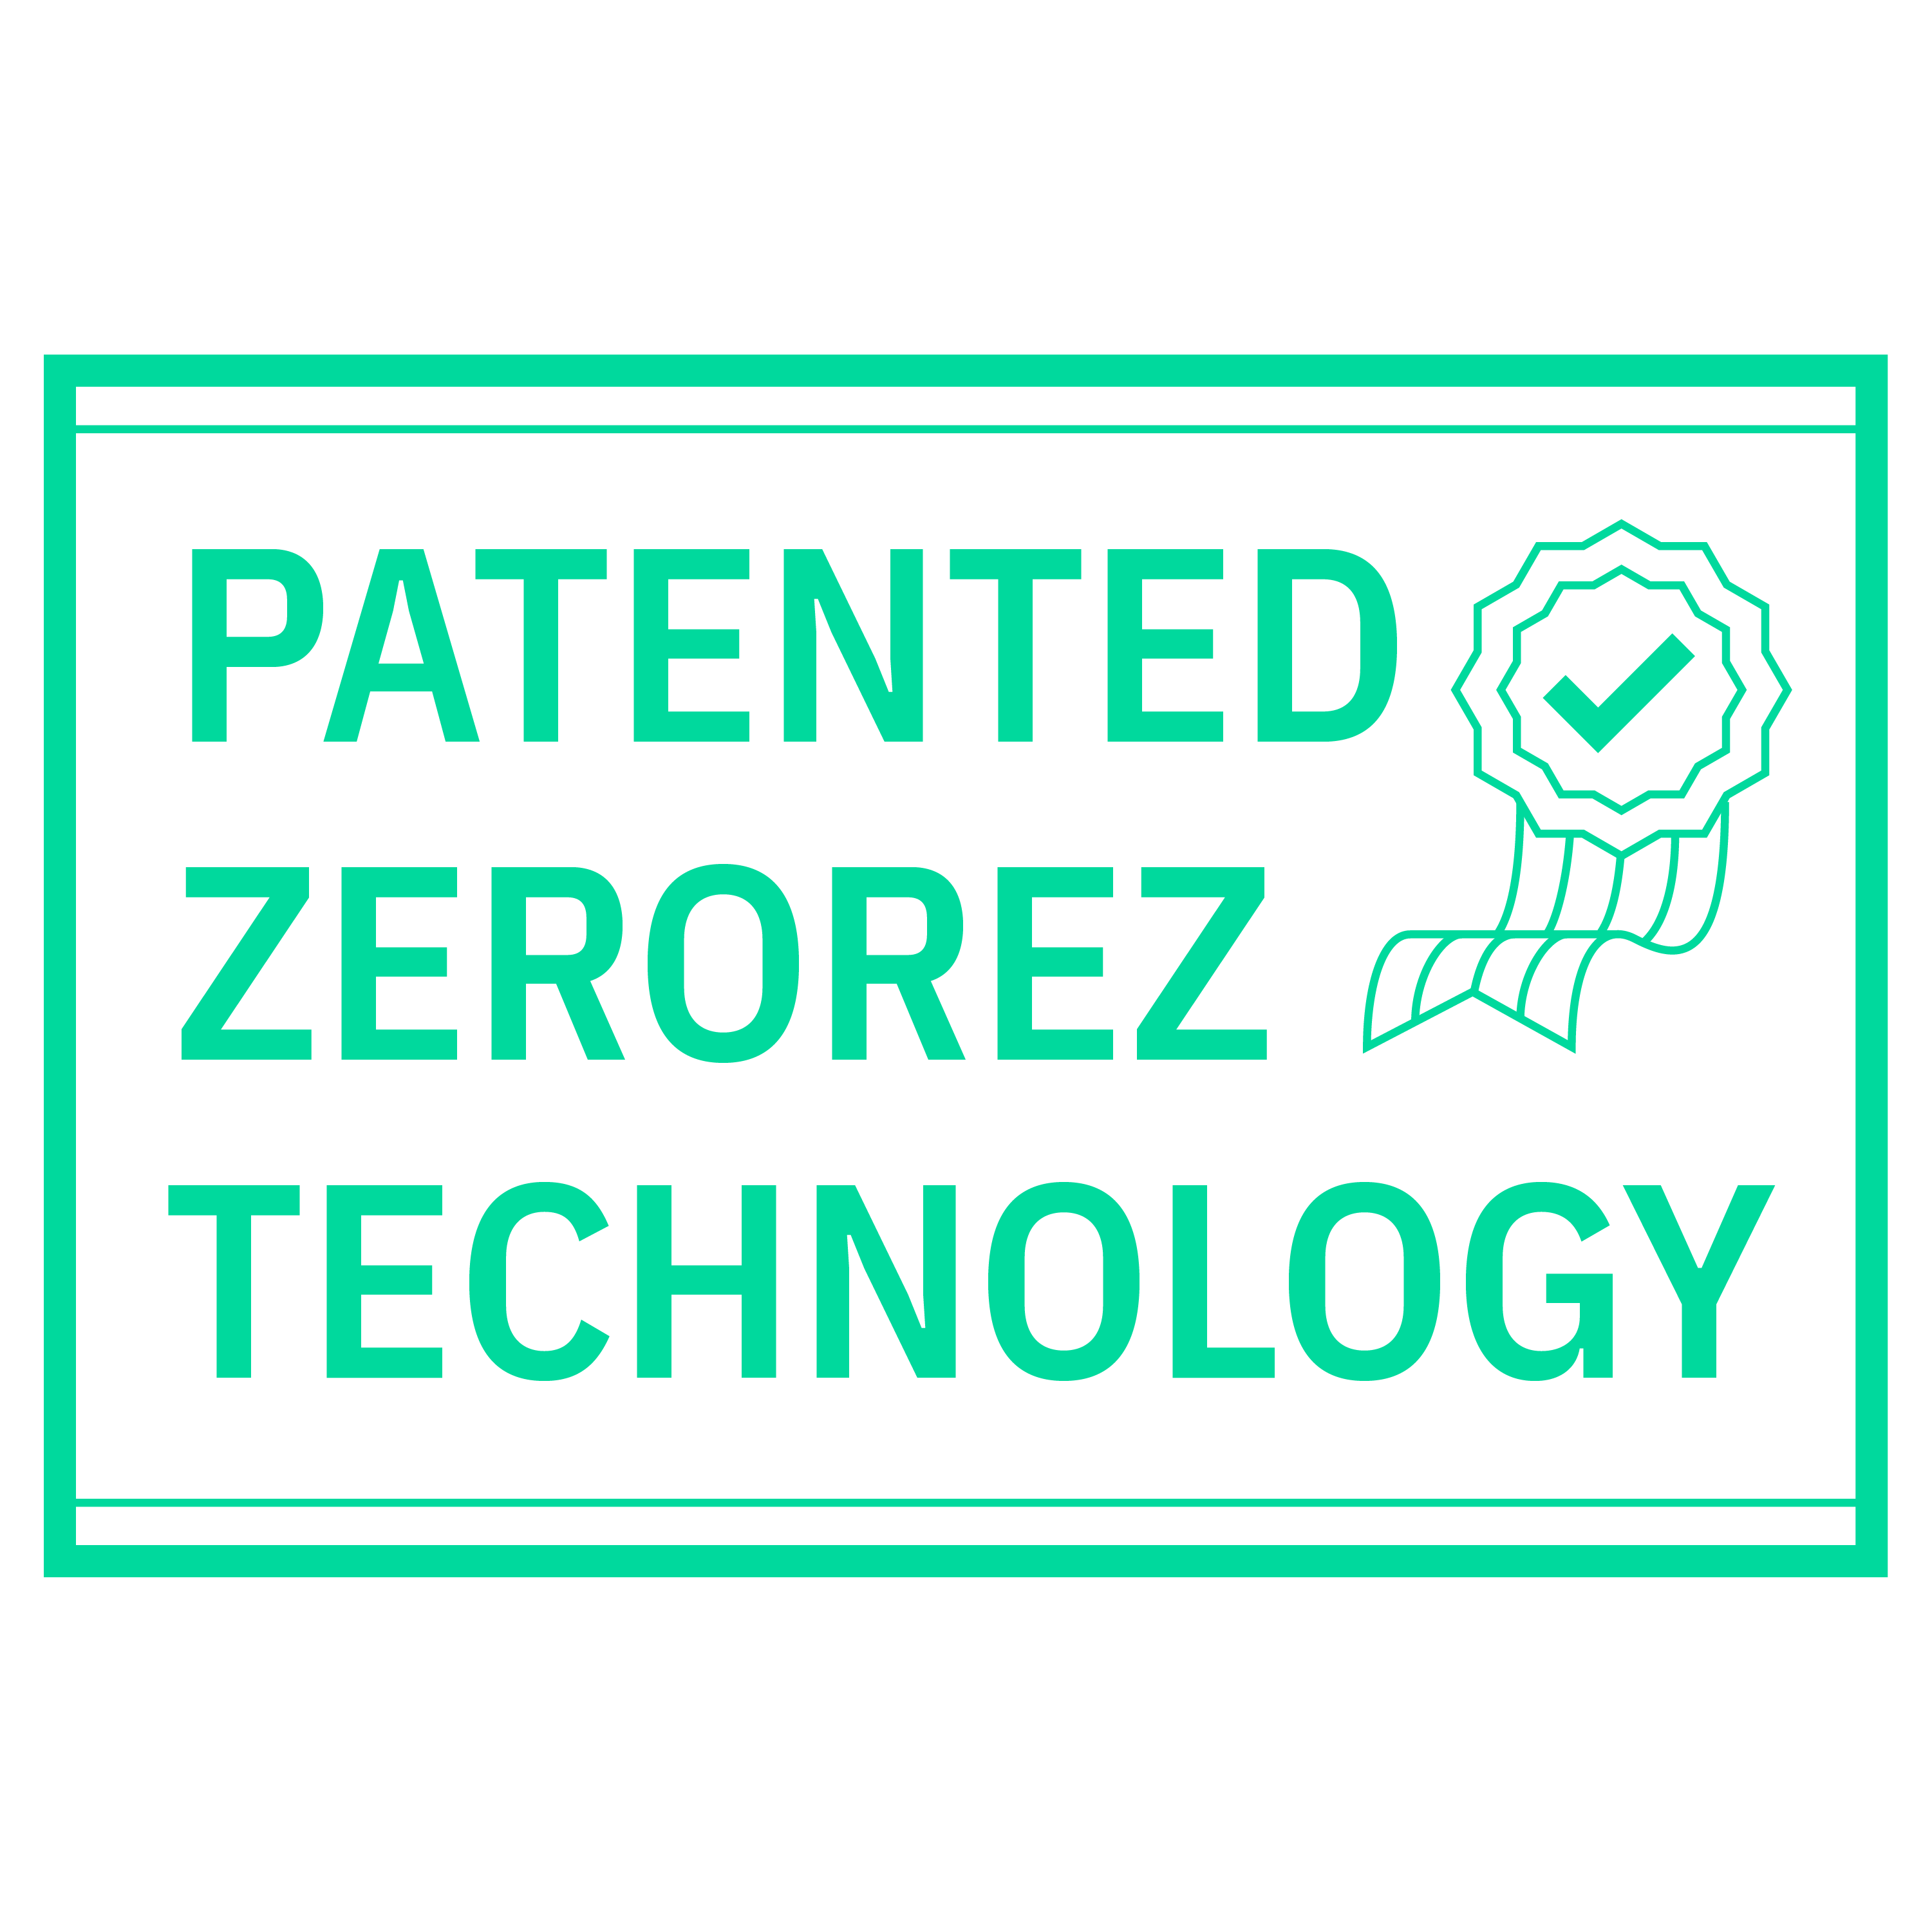 Learn about Zerorez Calgary's patented tech.